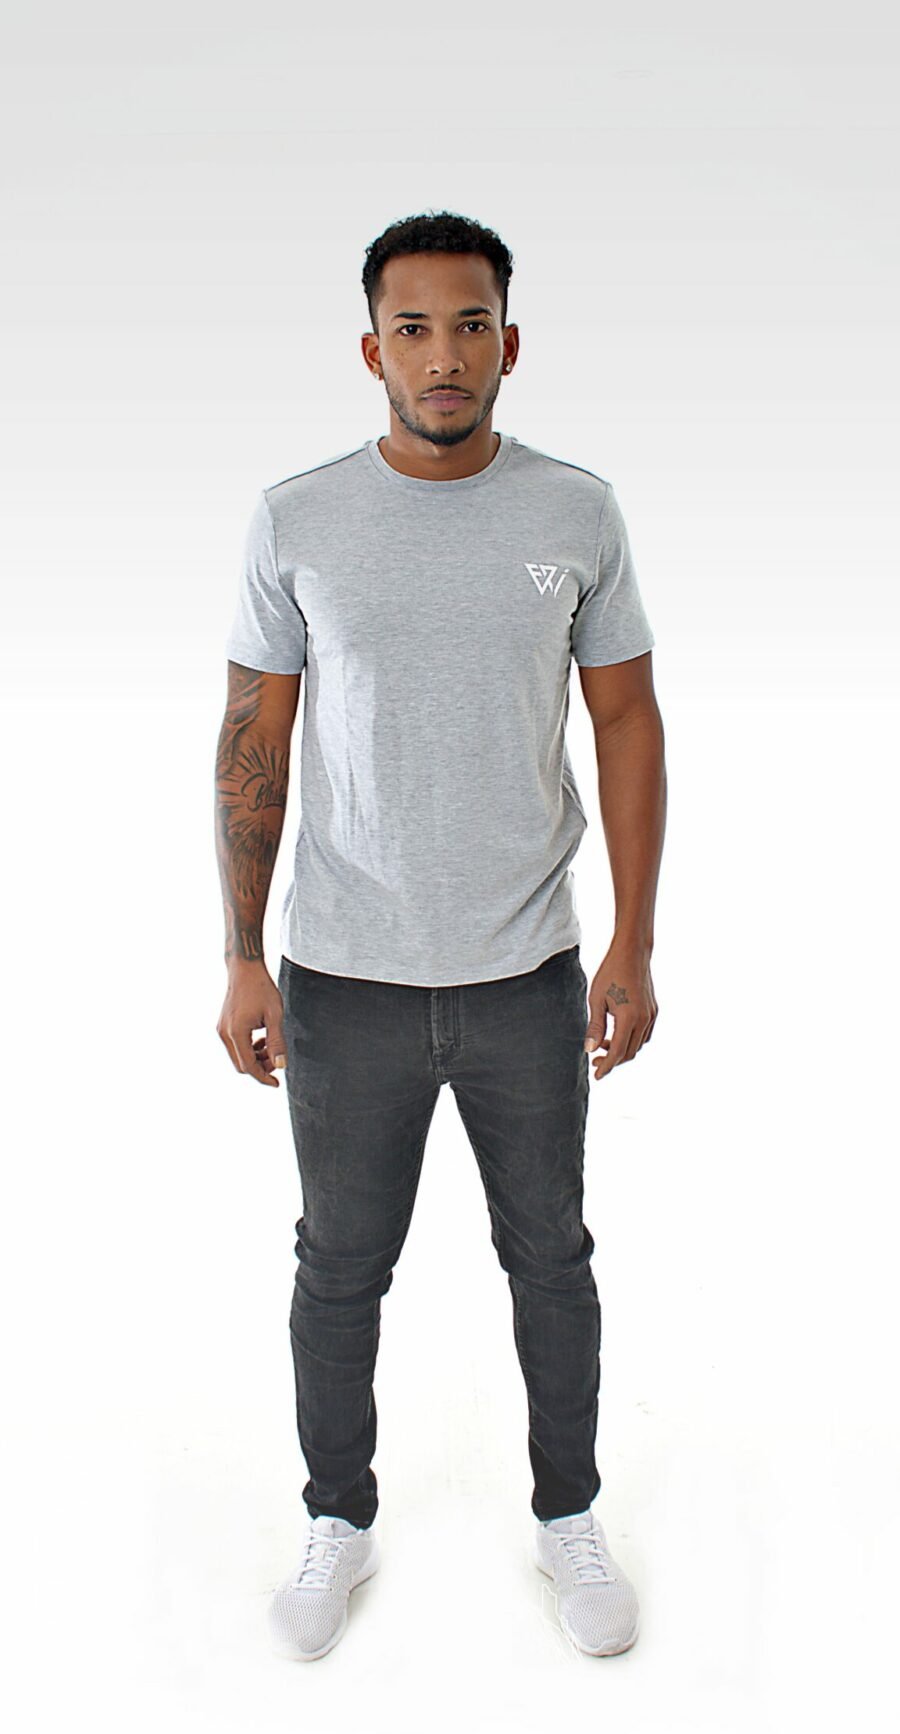 Tee-shirt homme gris claire logo blanc